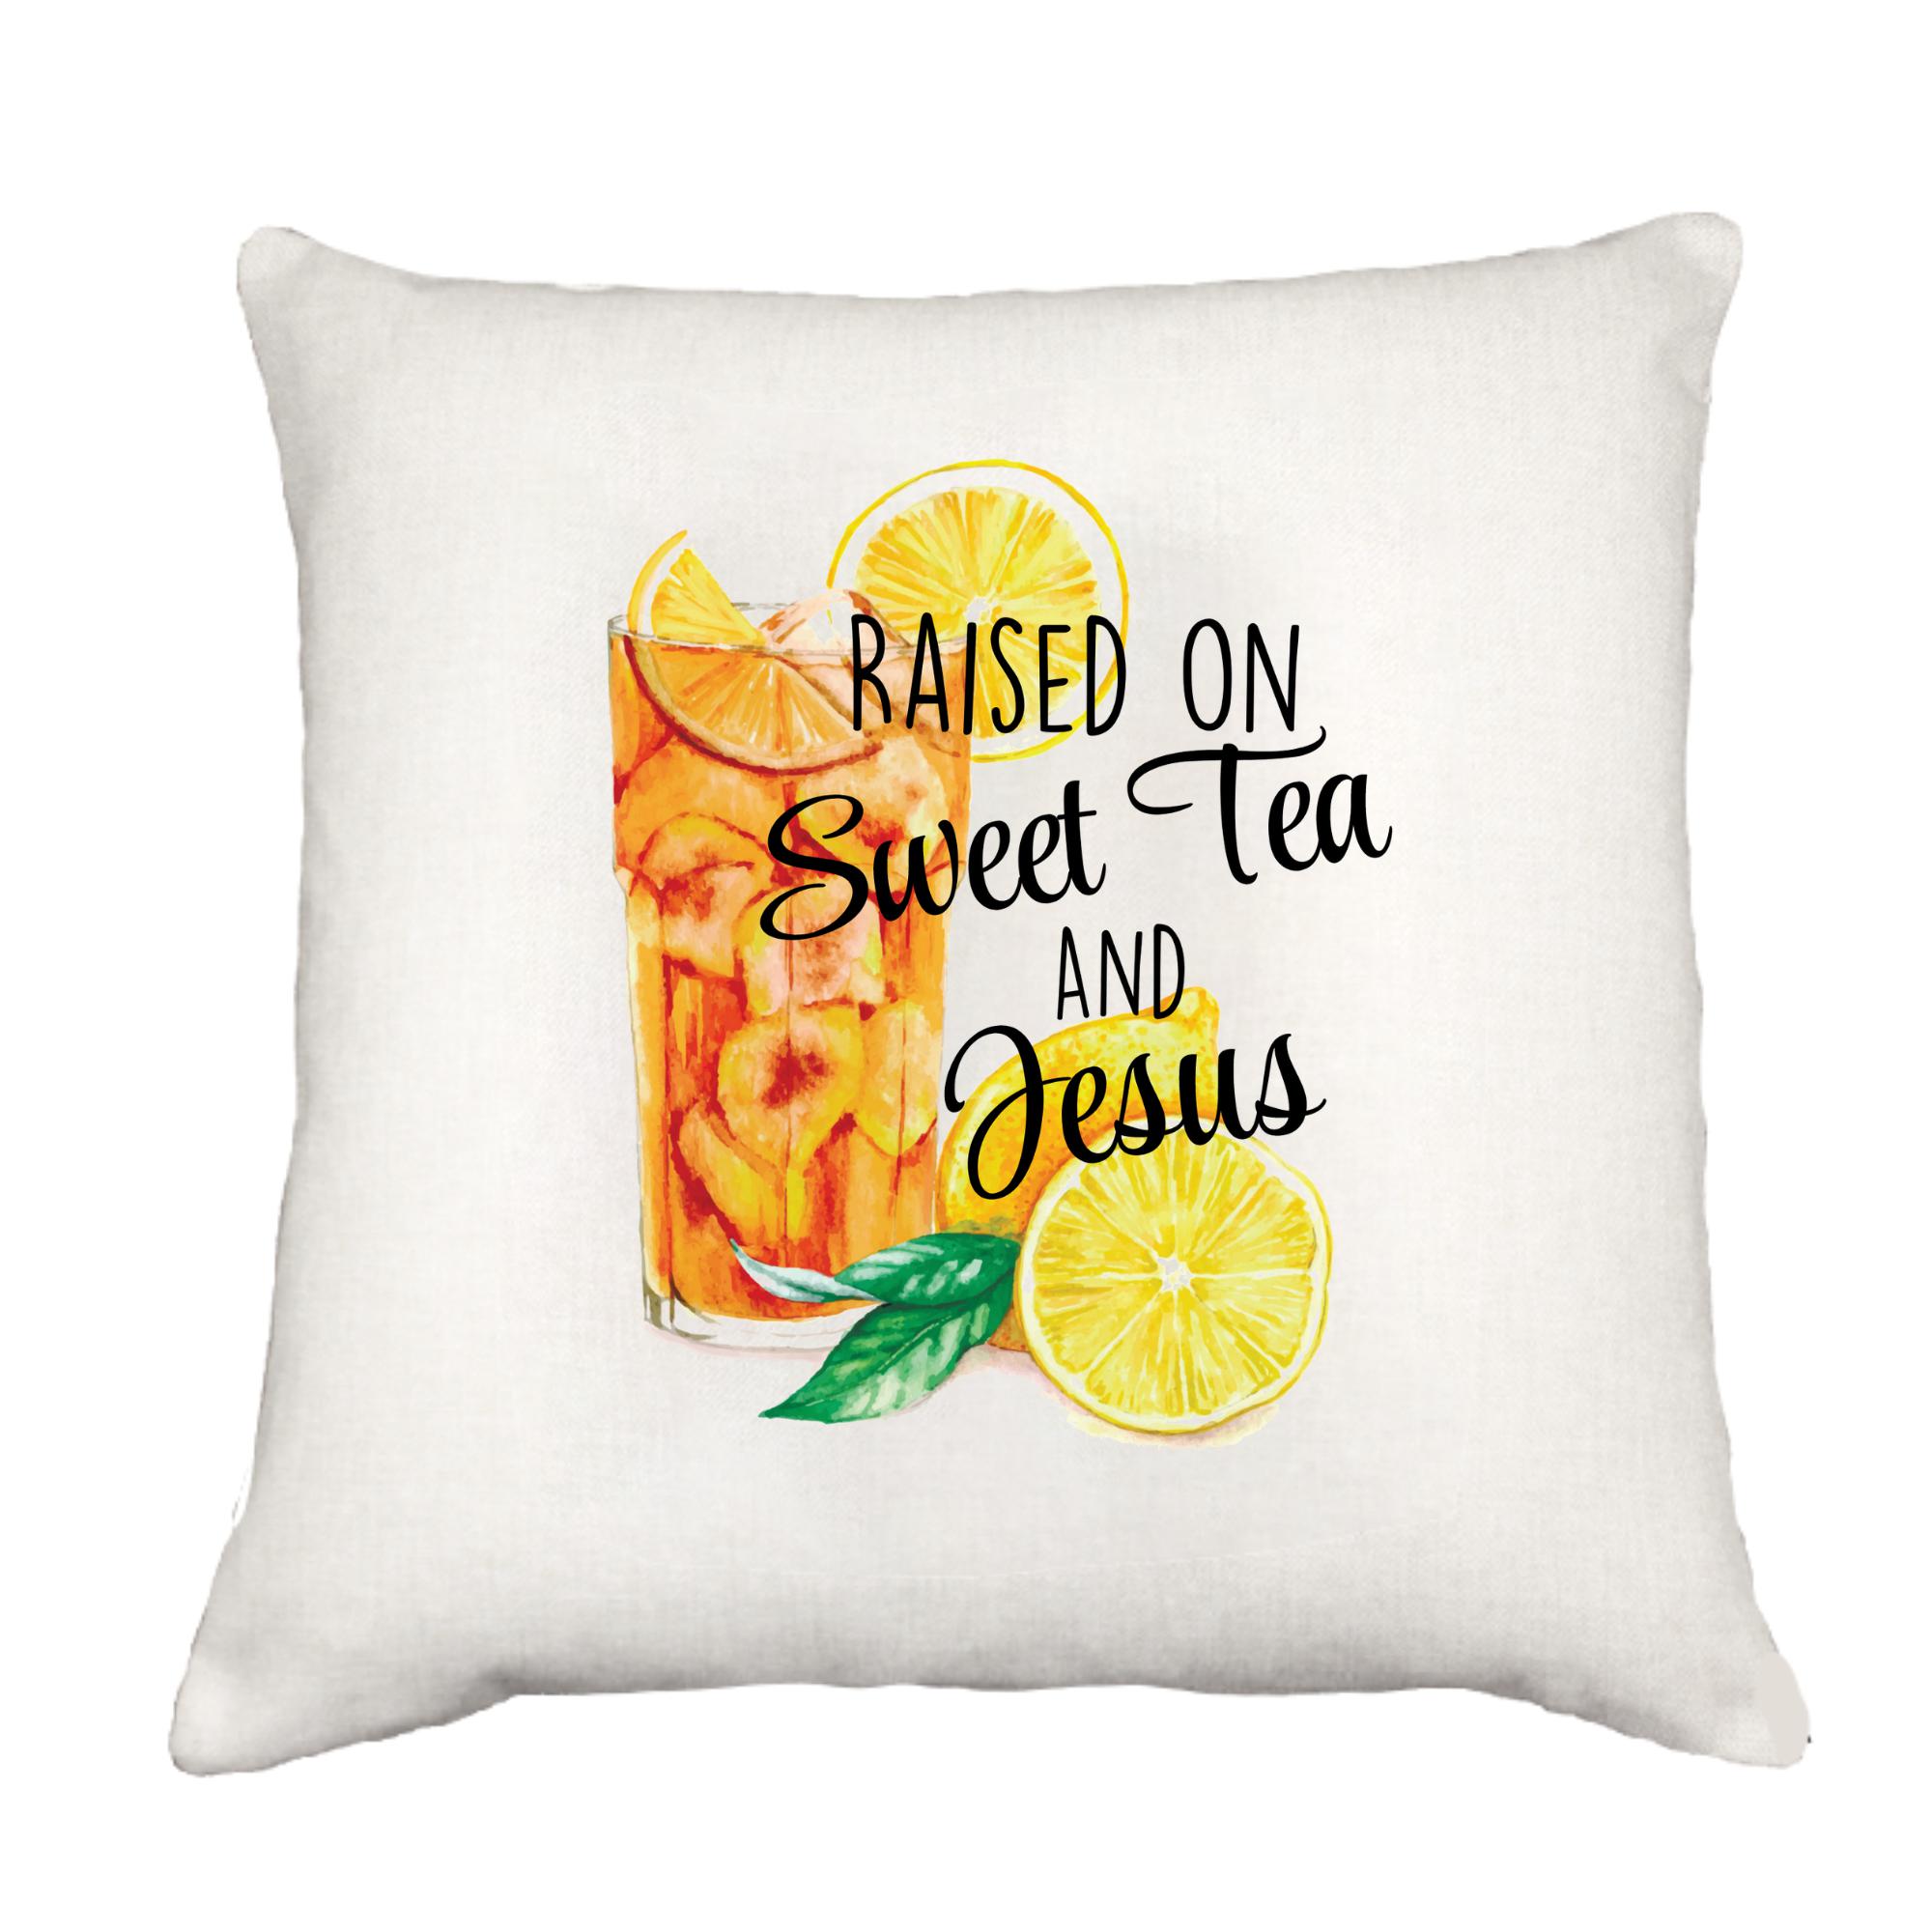 Sweet Tea And Jesus Down Pillow